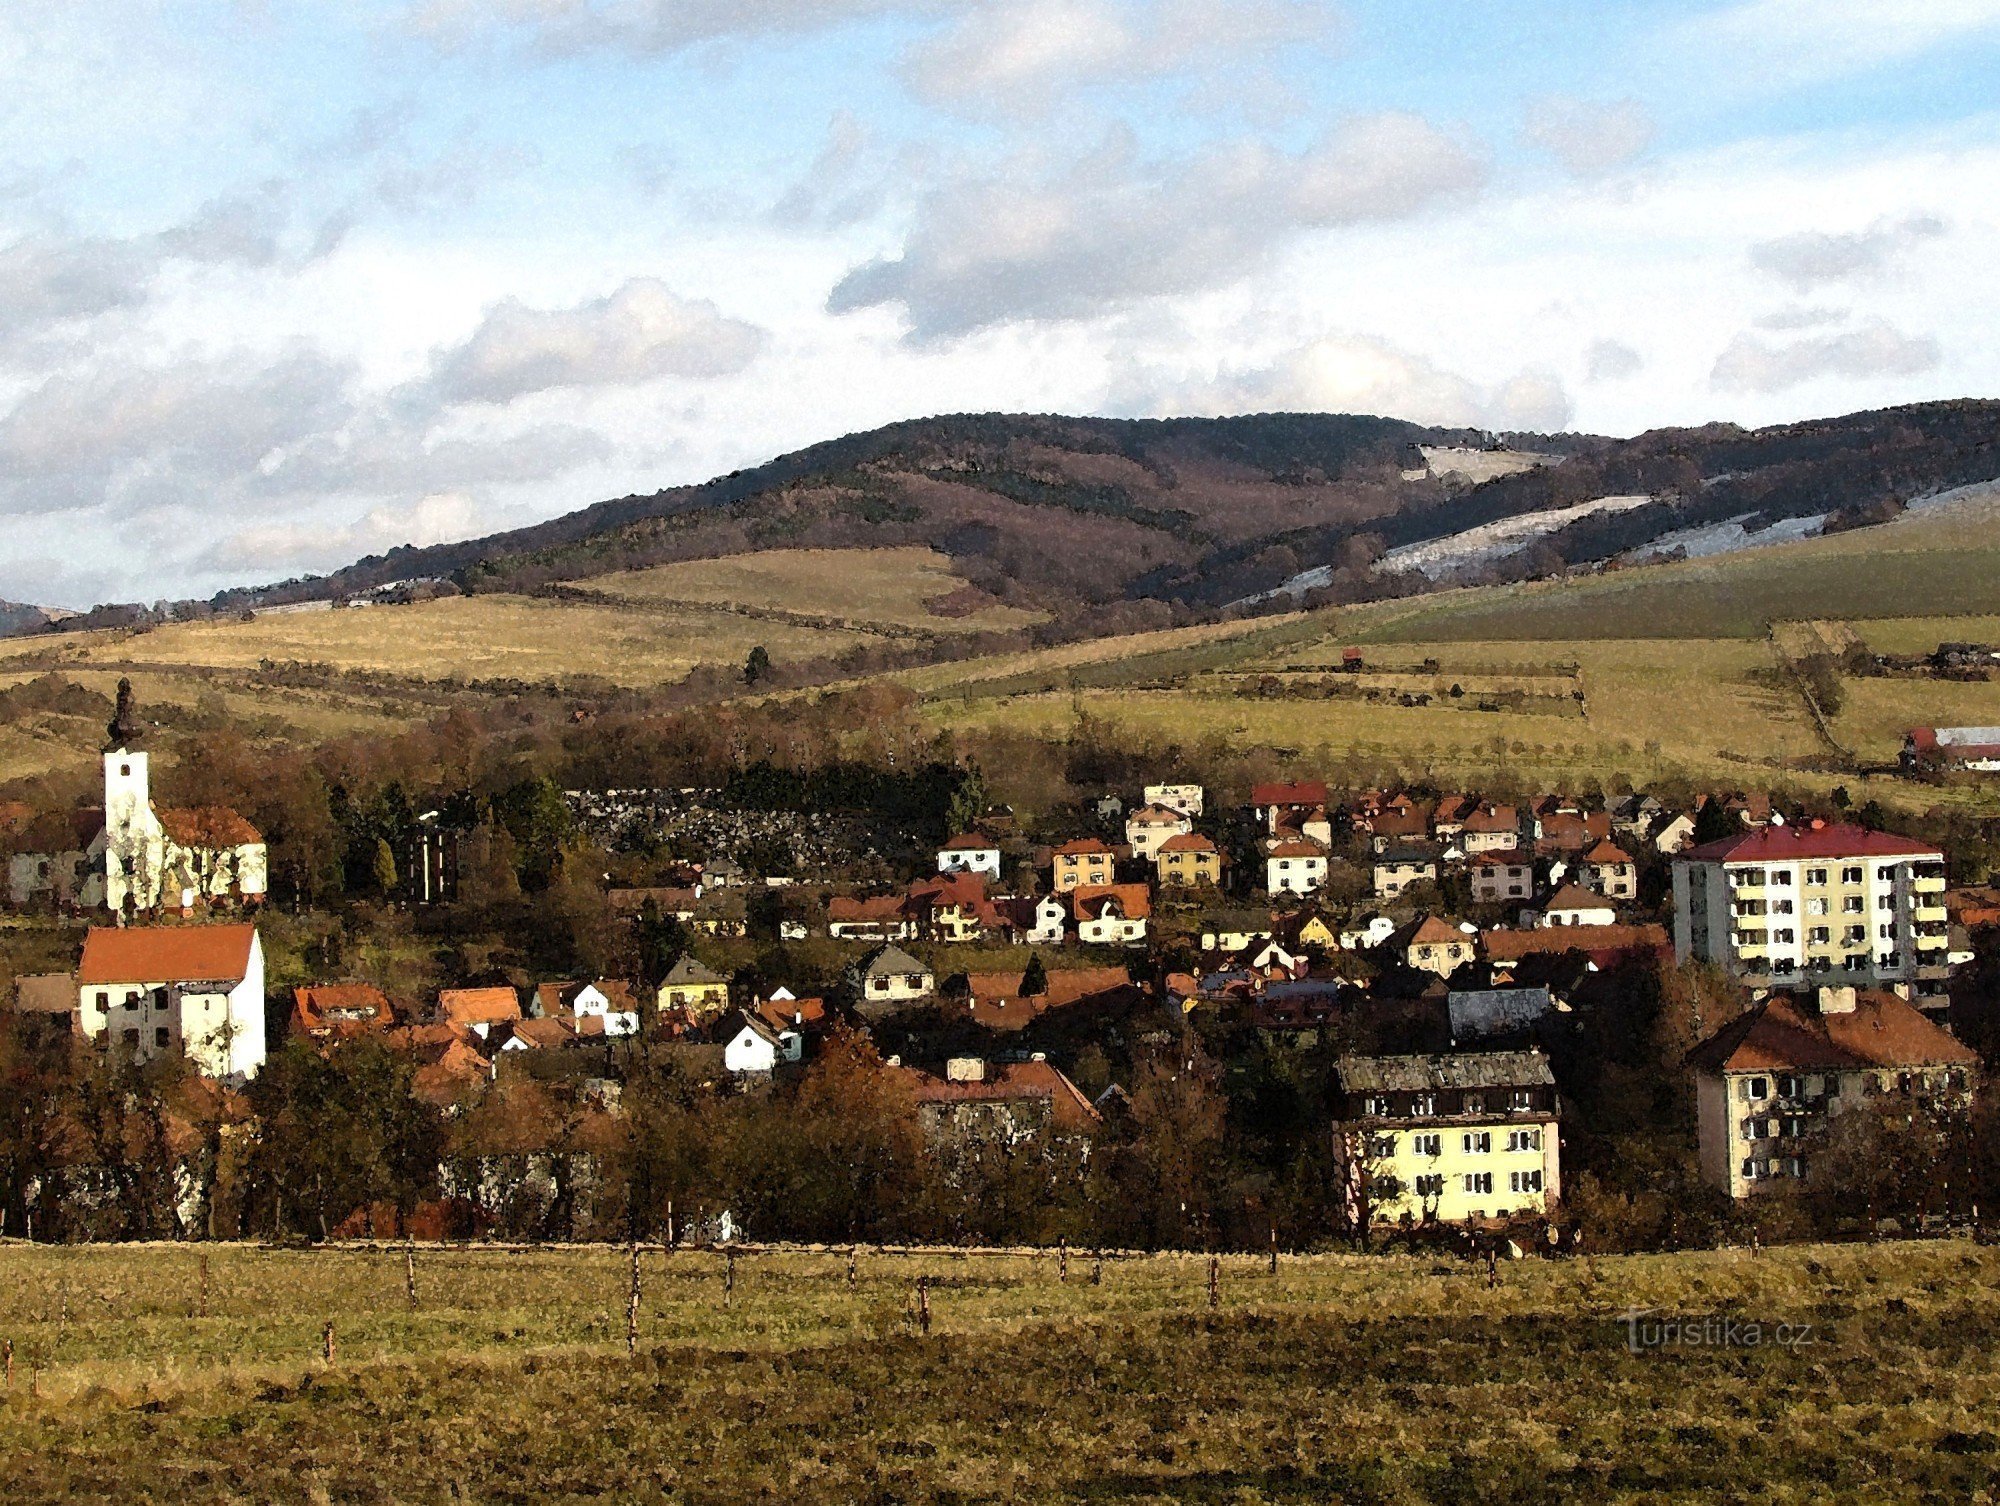 la ville de Brumov - Bylnice en arrière-plan avec Holý vrch